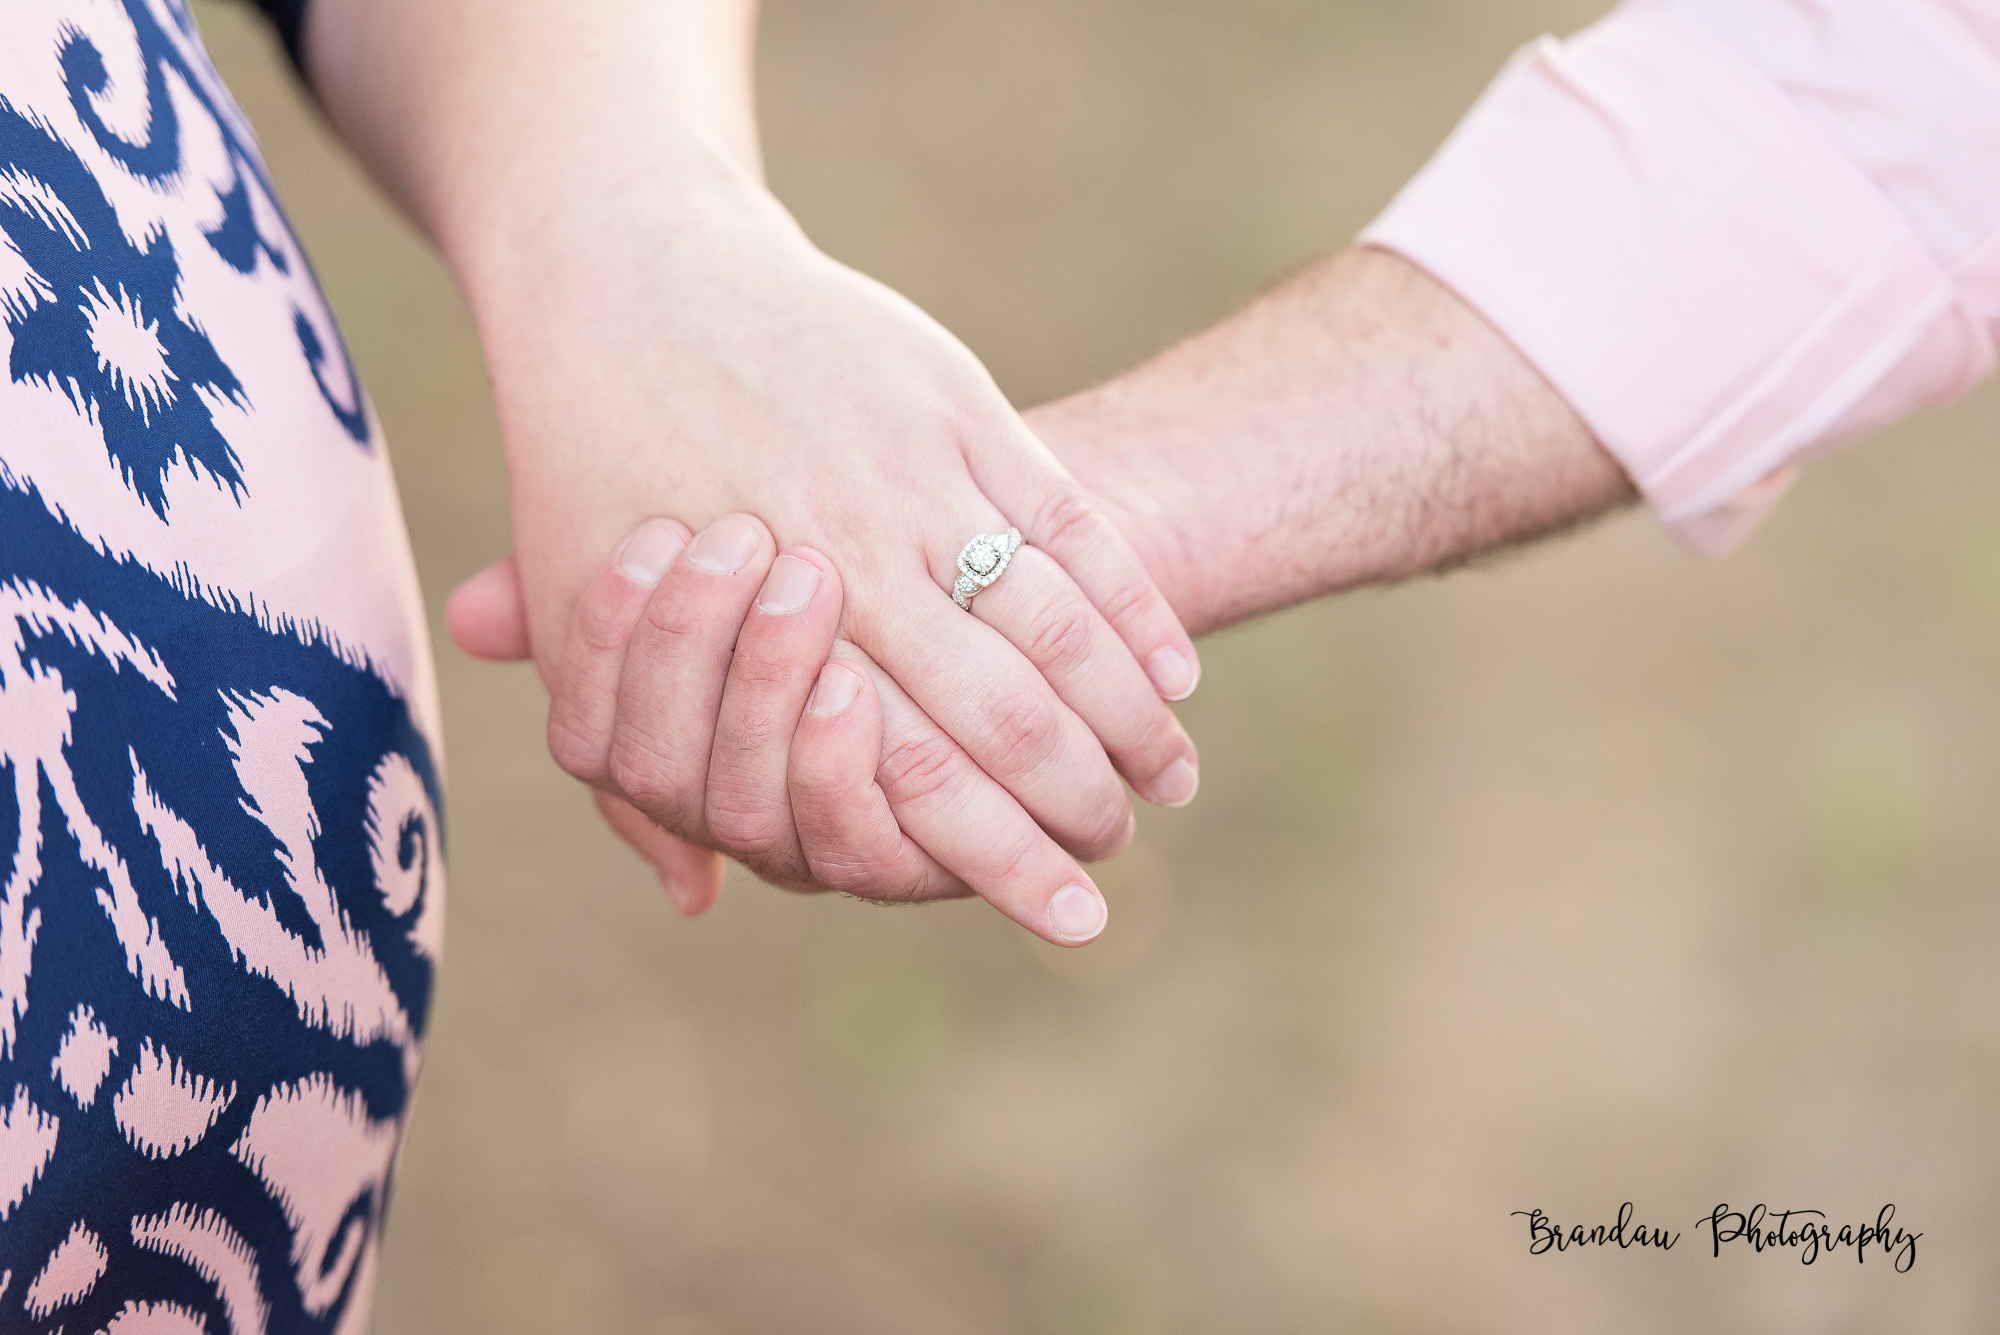 Engagement Ring Holding Hands_Brandau Photography-17.jpg